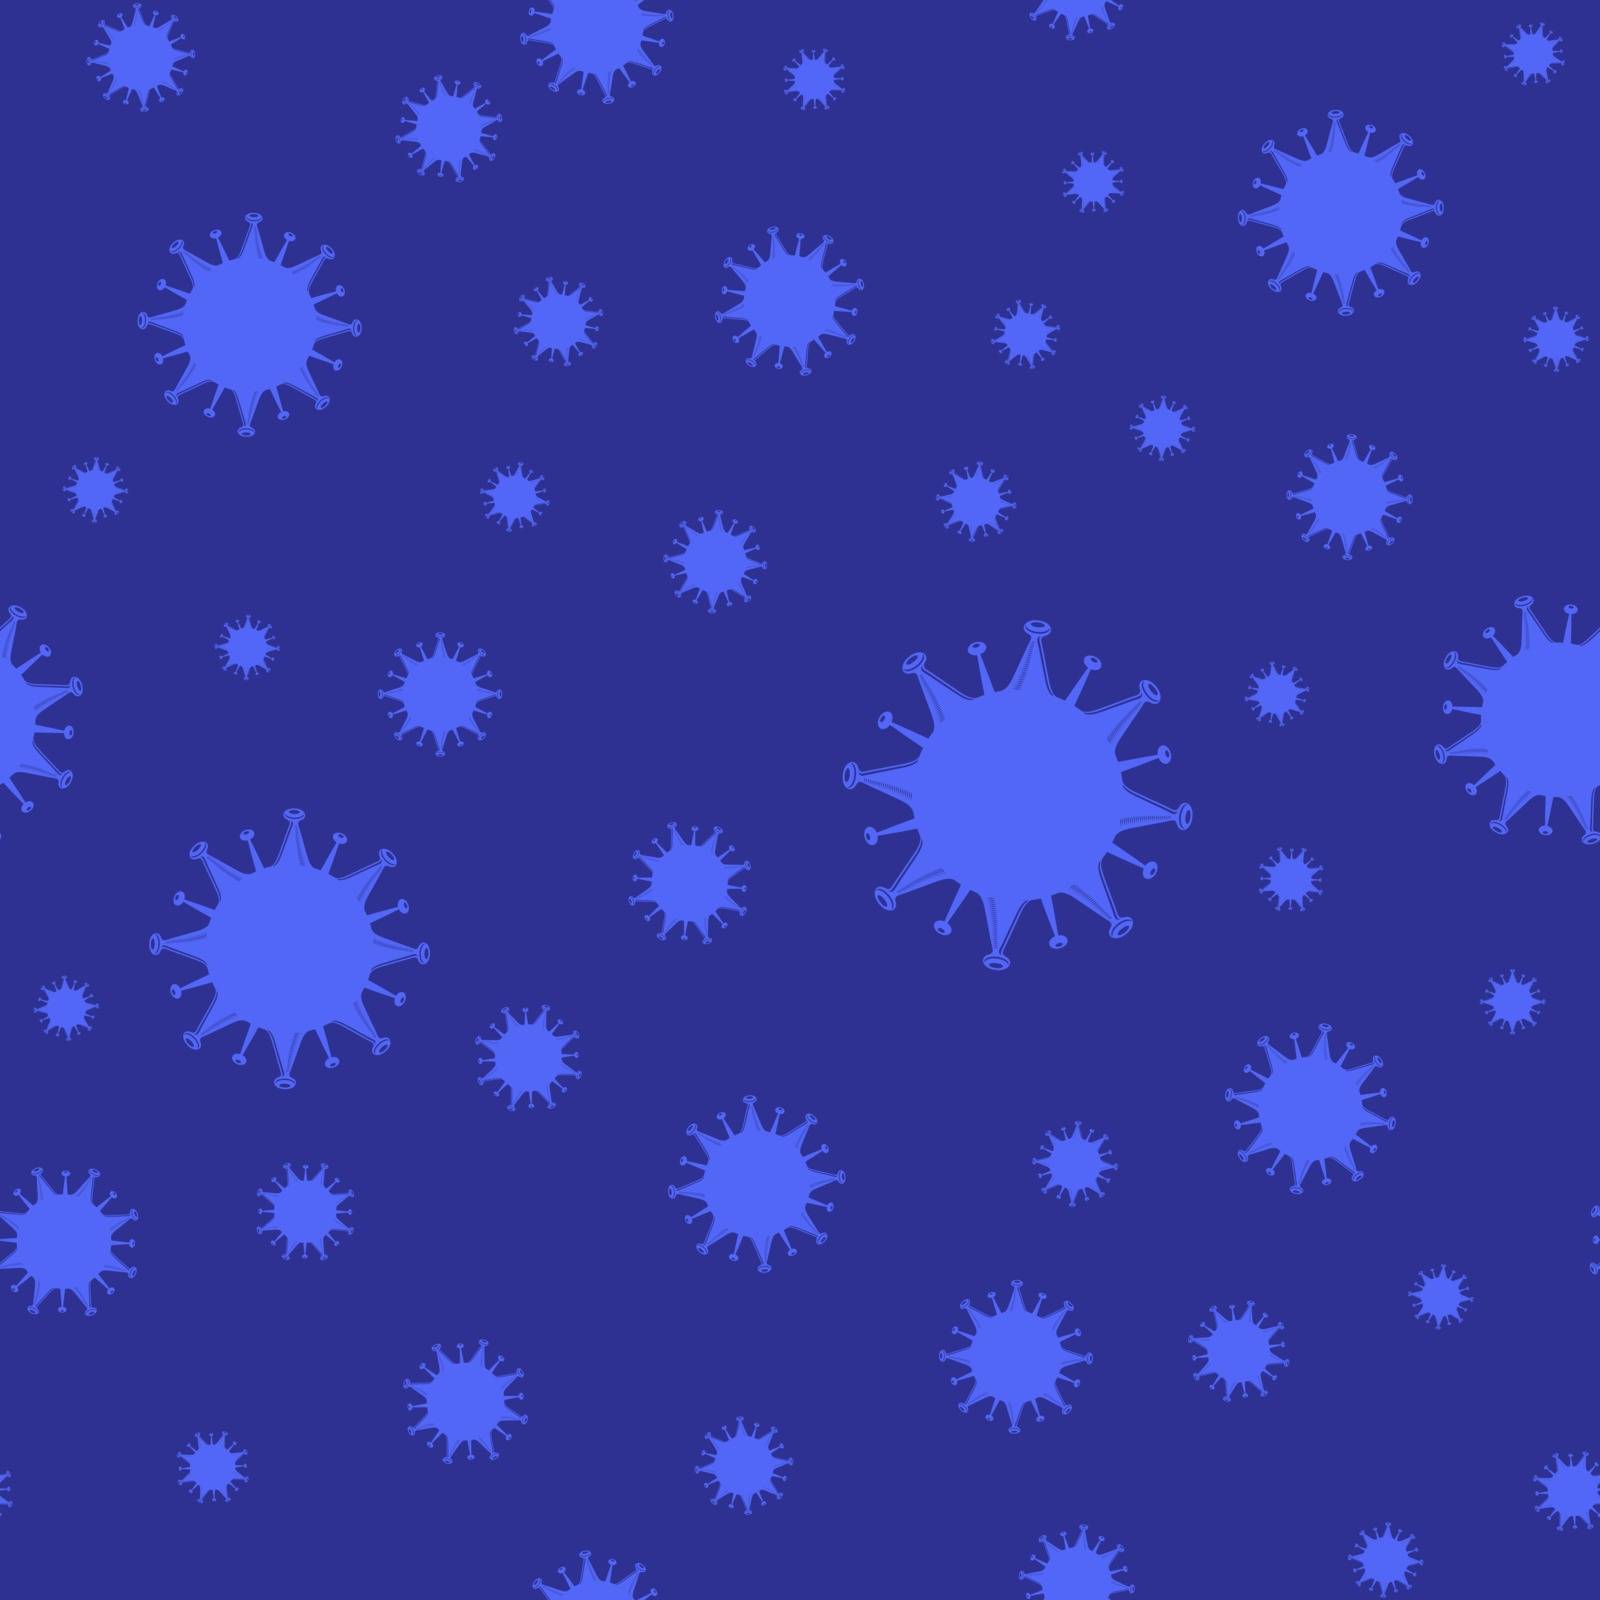 Stop Pandemic Novel Coronavirus Sign Isolated on Blue Background. Seamless Pattern by valeo5